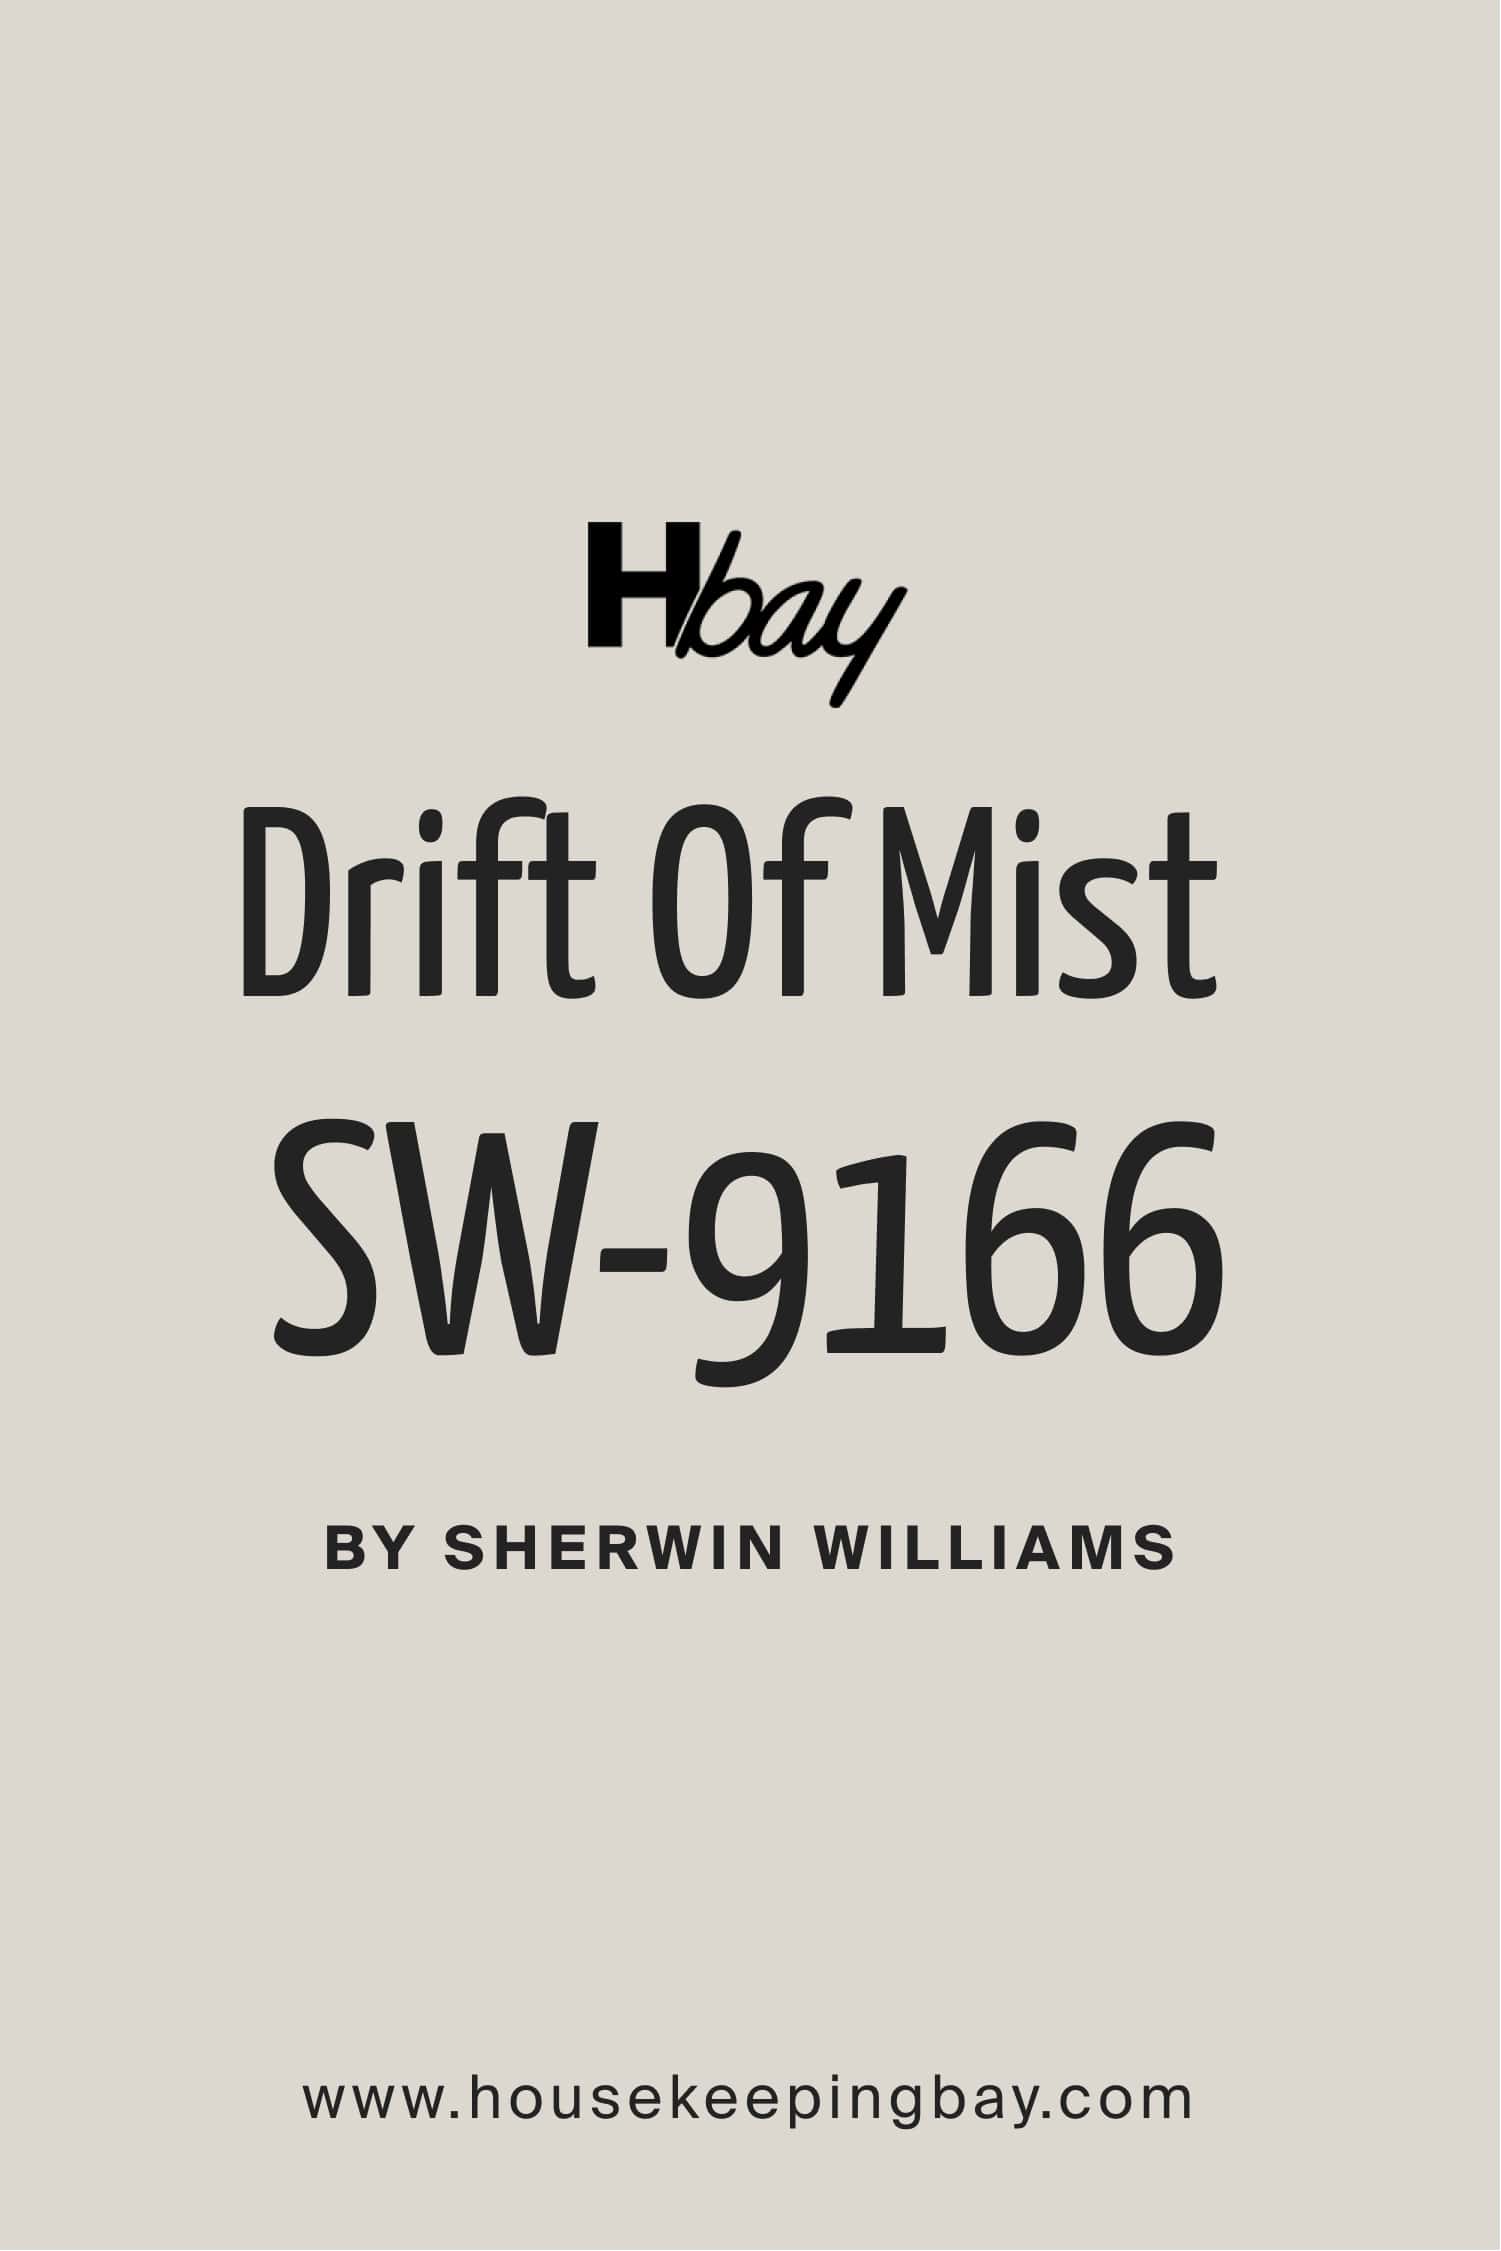 Drift Of Mist SW 9166 by Sherwin Williams